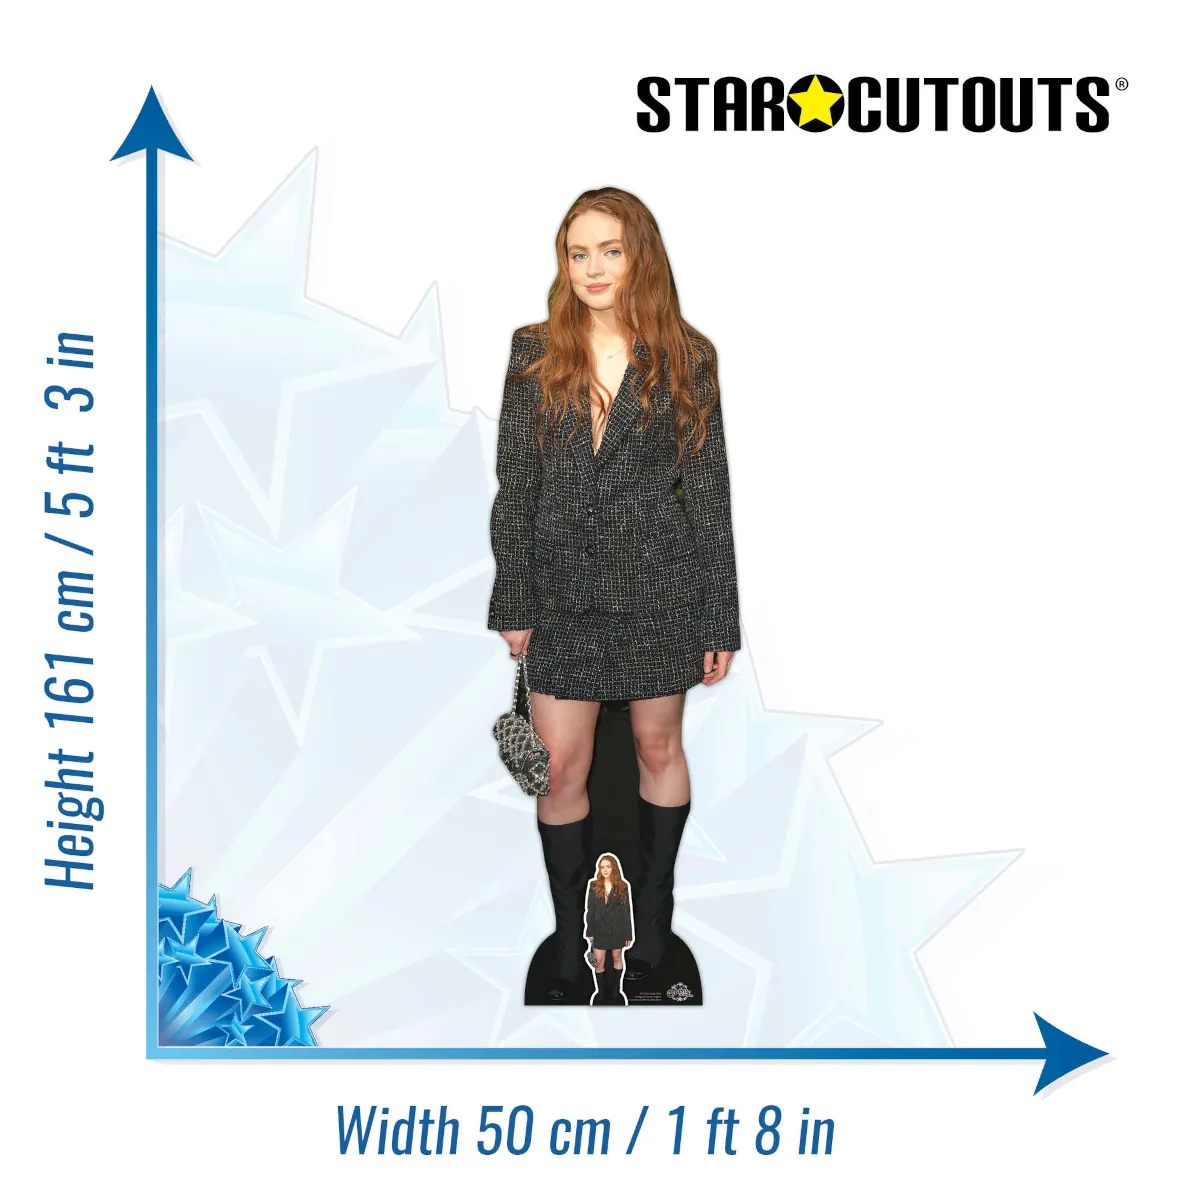 CS1016 Sadie Sink 'Jacket & Skirt' (American Actress) Lifesize + Mini Cardboard Cutout Standee Size